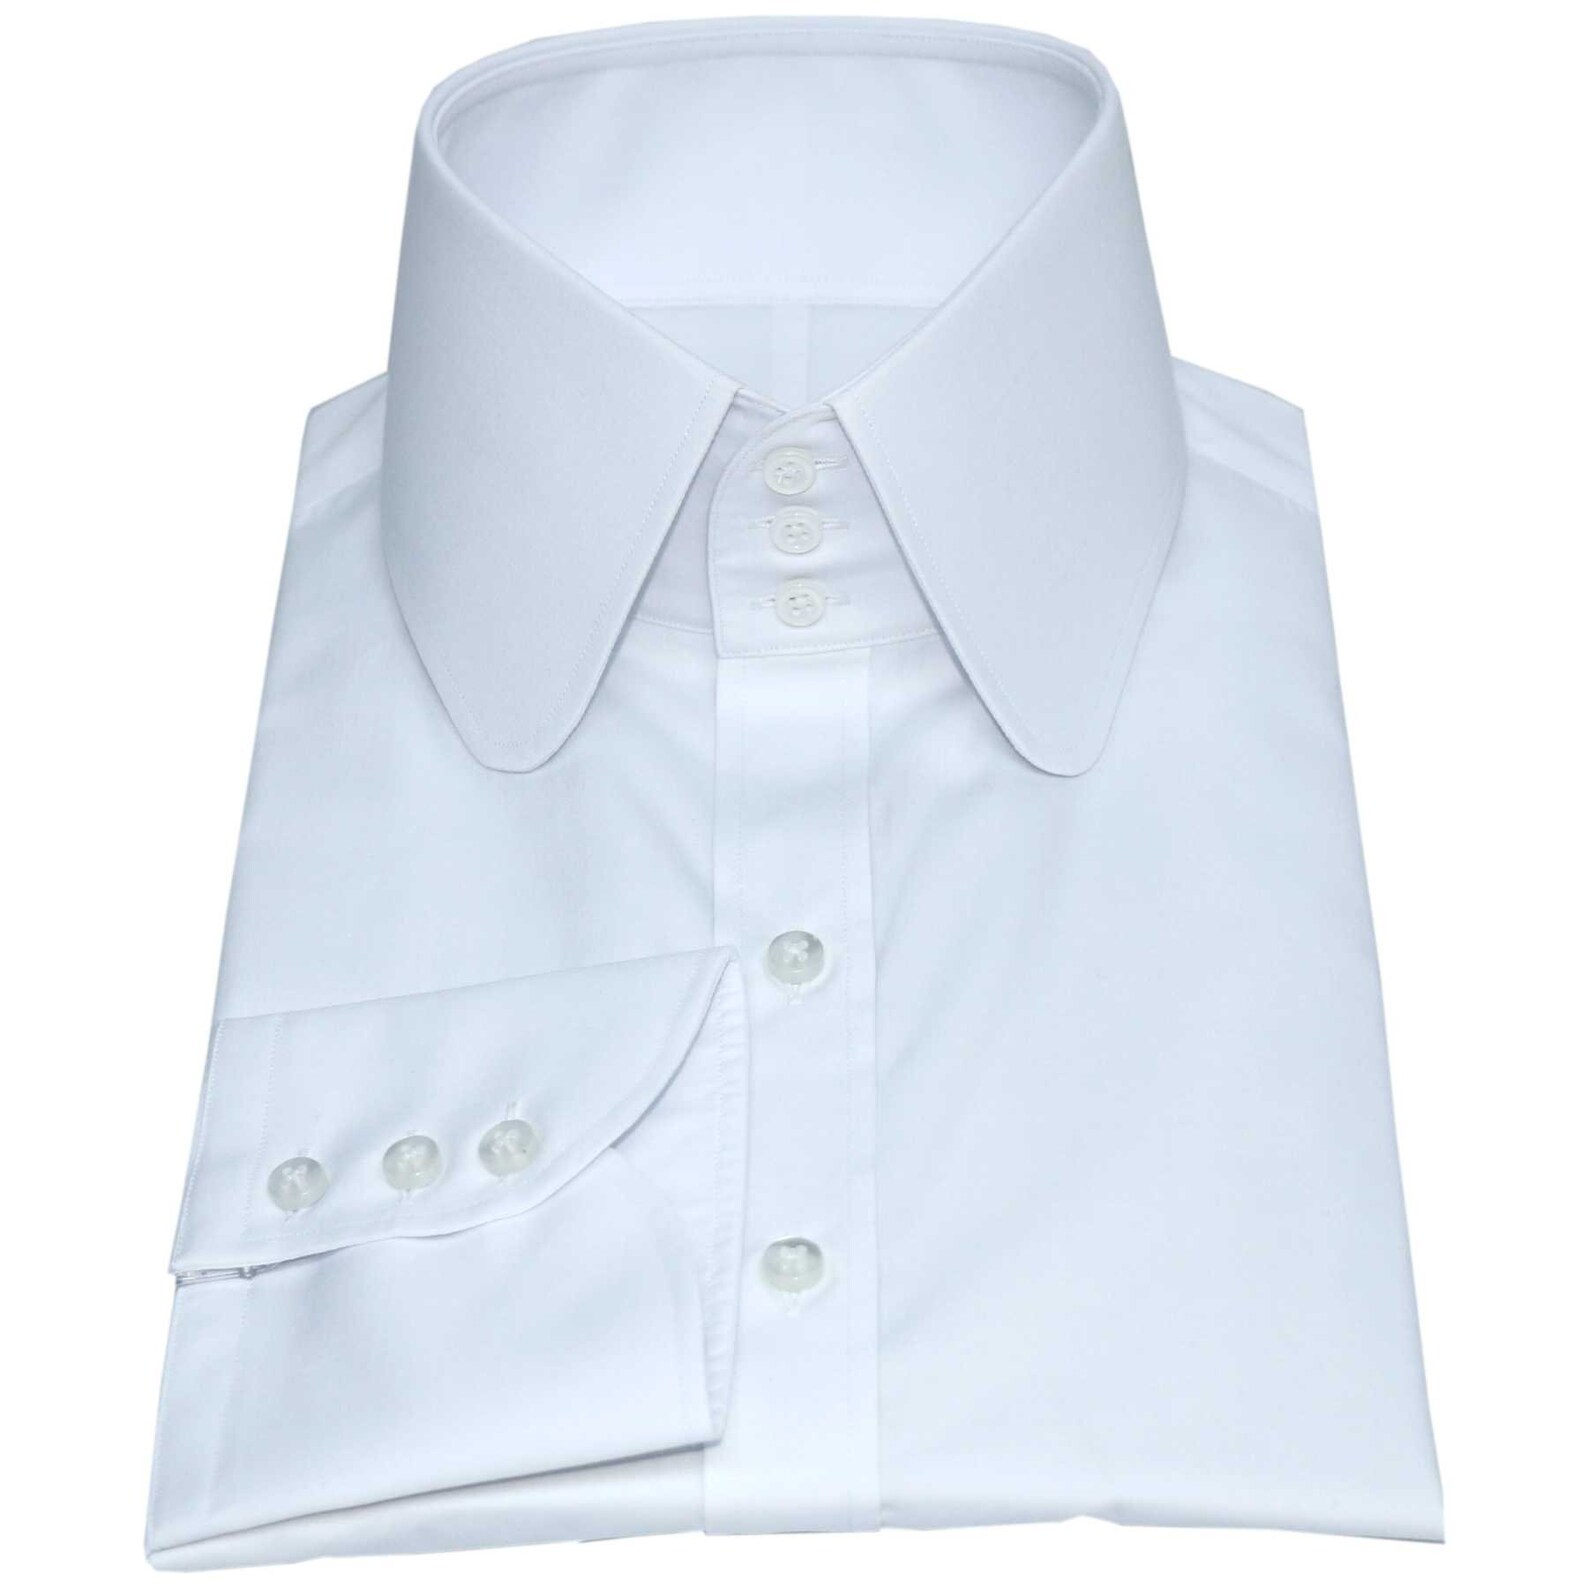 High Collar Shirt Plain White High Neck Penny Collar 3 Buttons 100% ...